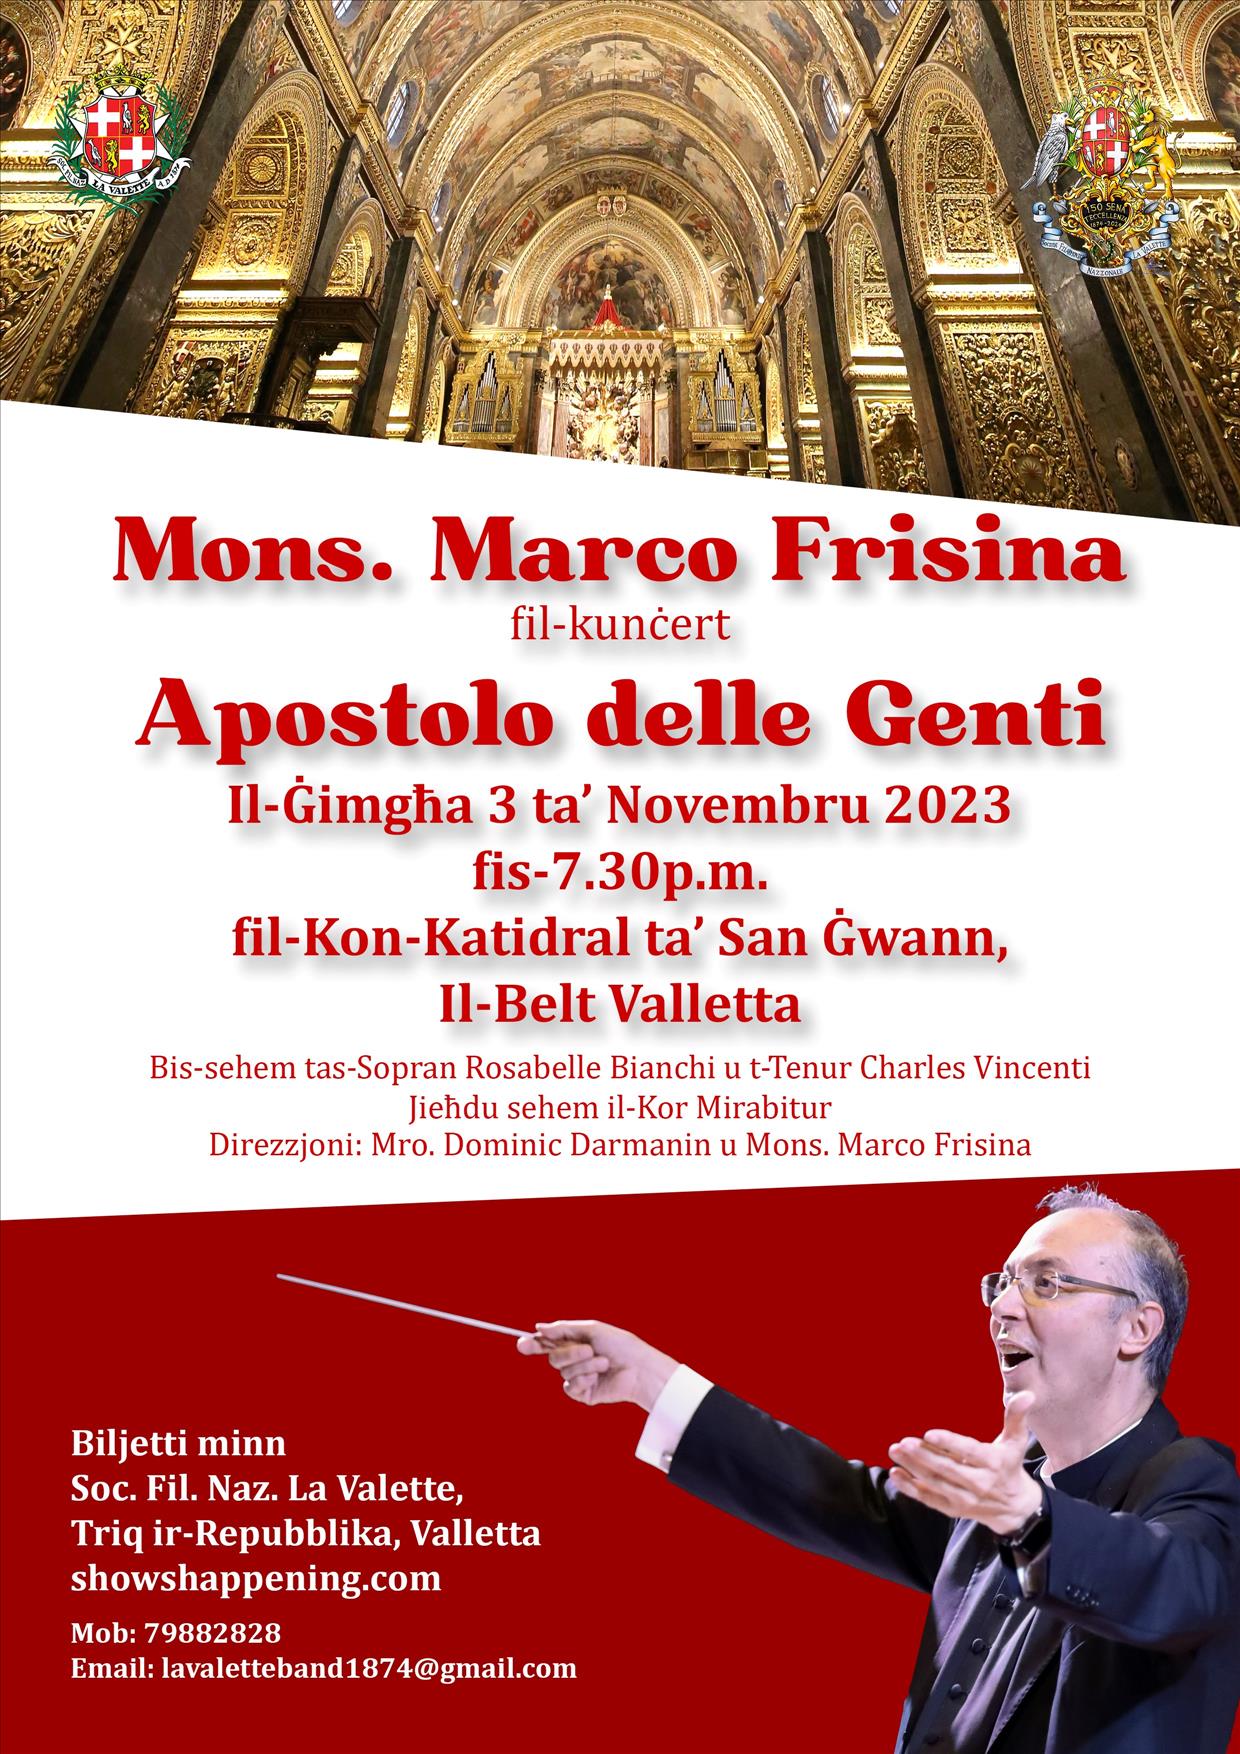 Mons. Marco Frisina fil-Kunċert Apostolo delle Genti poster